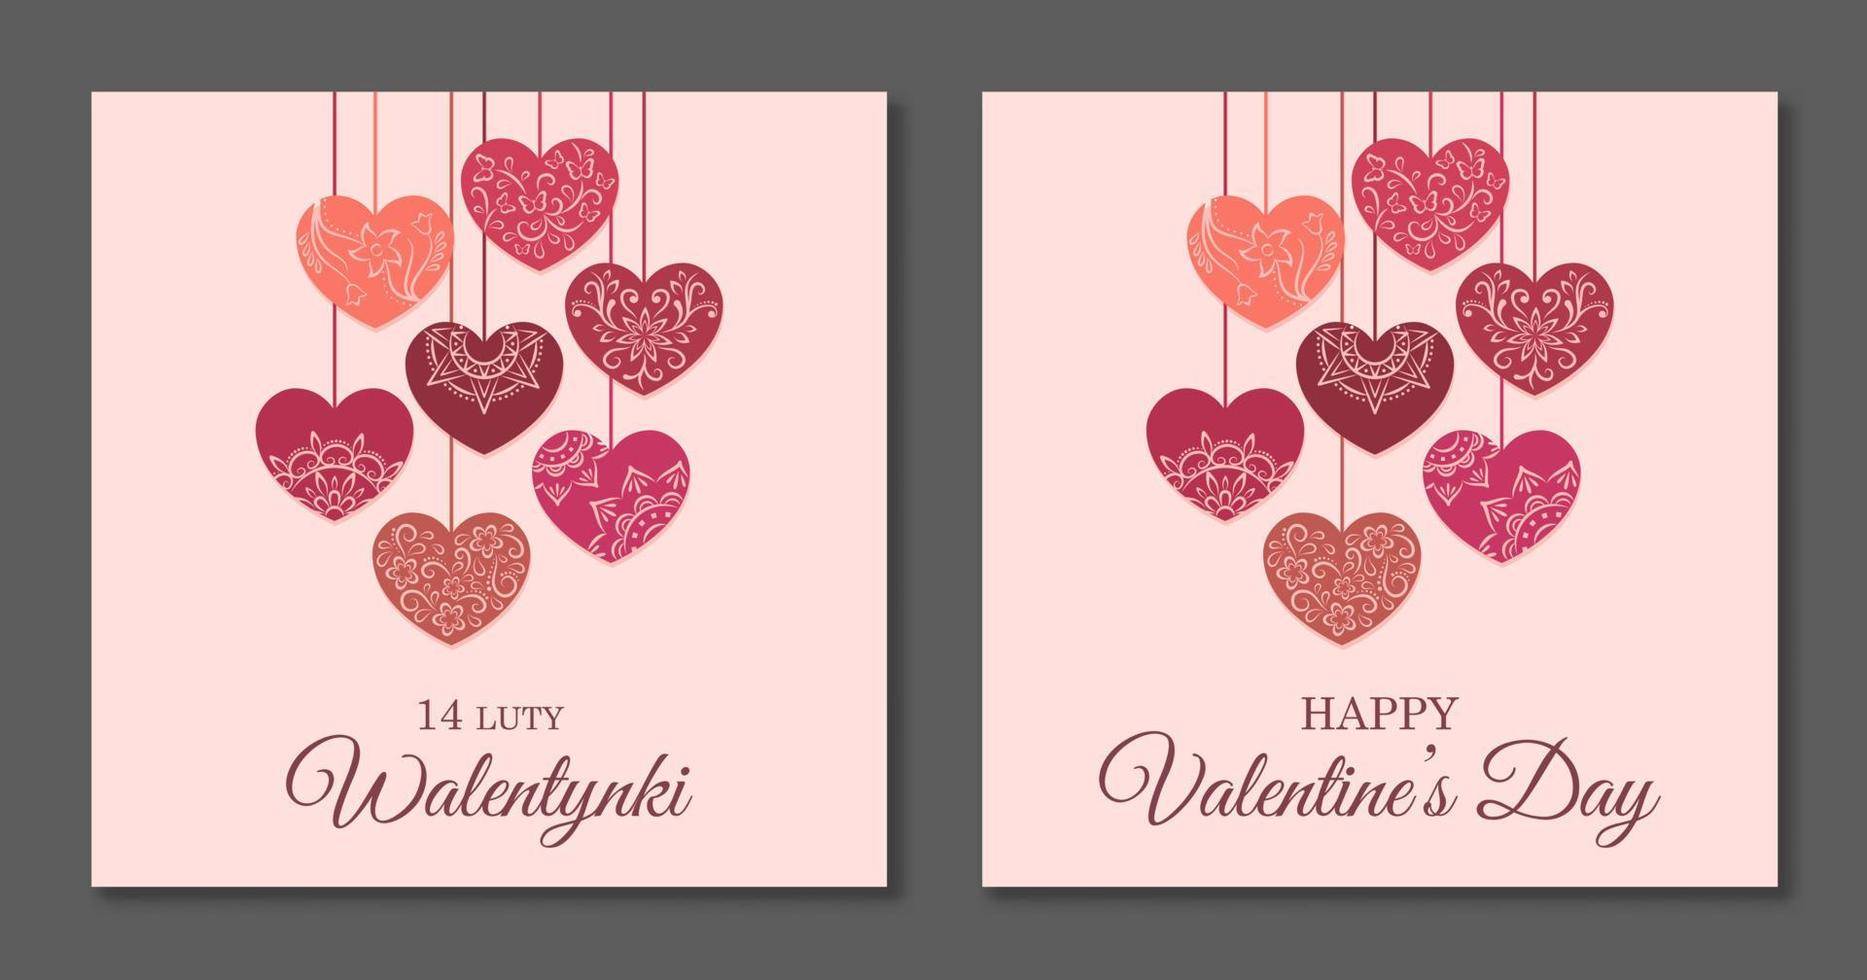 Día de San Valentín. corazones decorativos. polaco e inglés. vector